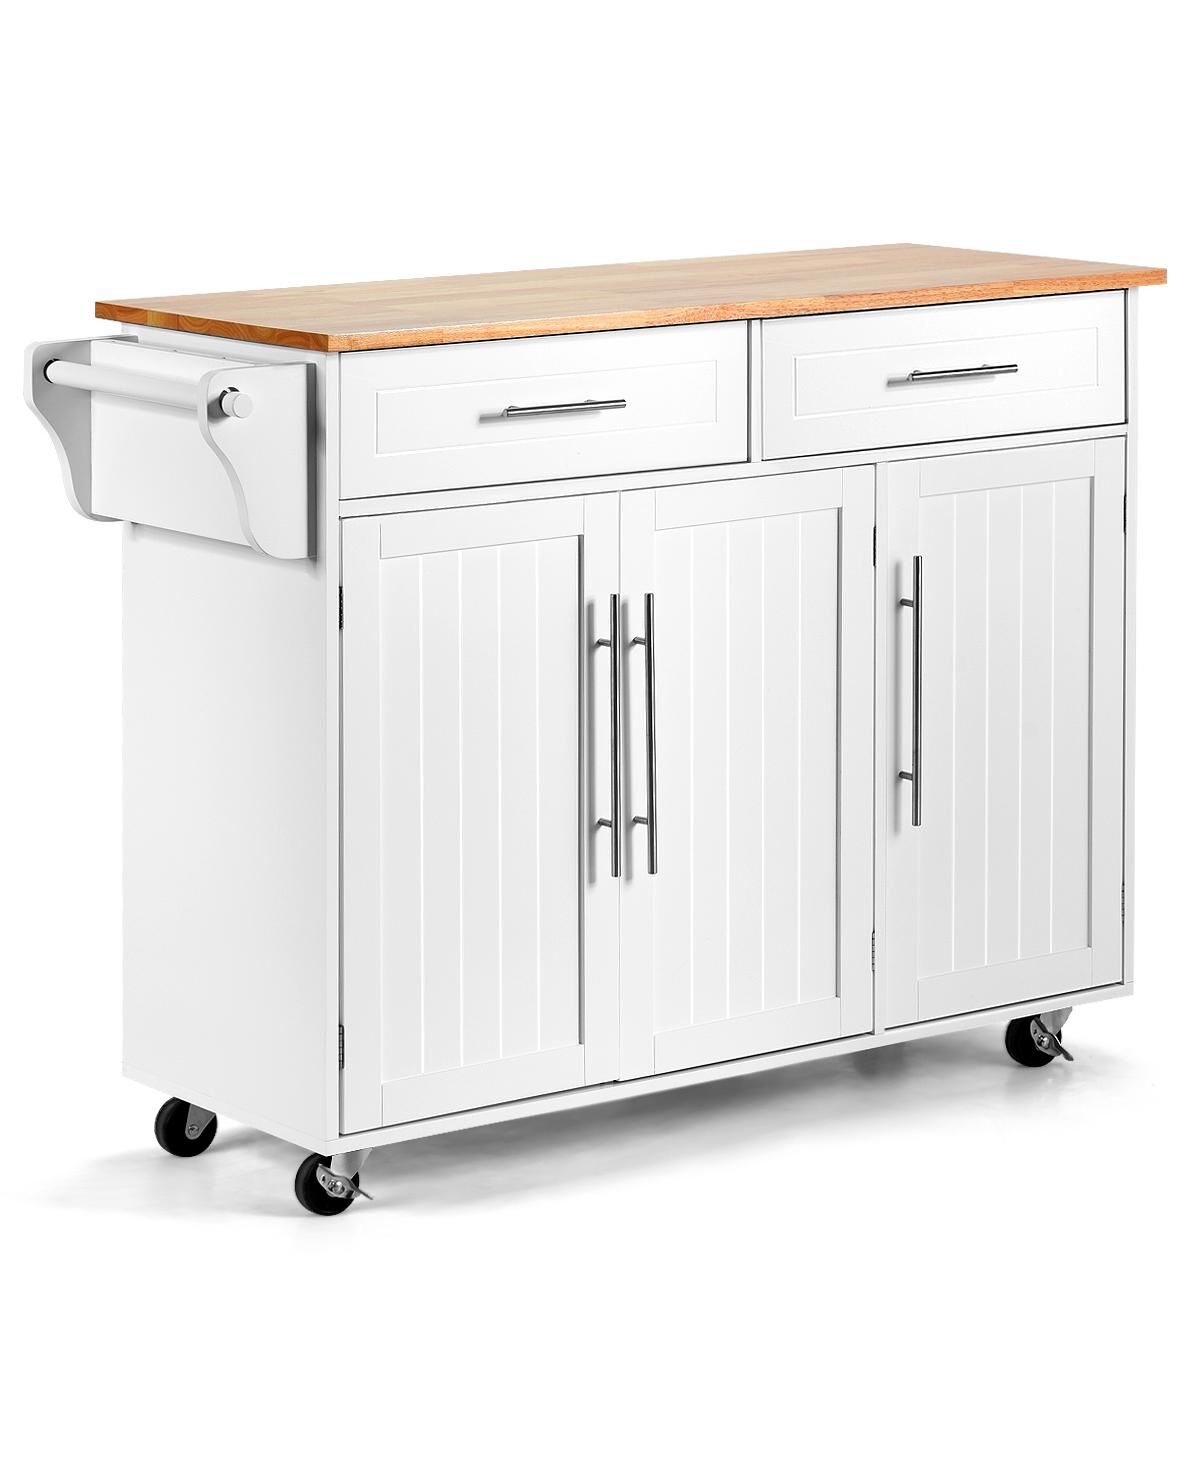 Costway Kitchen Island Trolley Cart Wood Brown Top Rolling Storage Cabinet - White